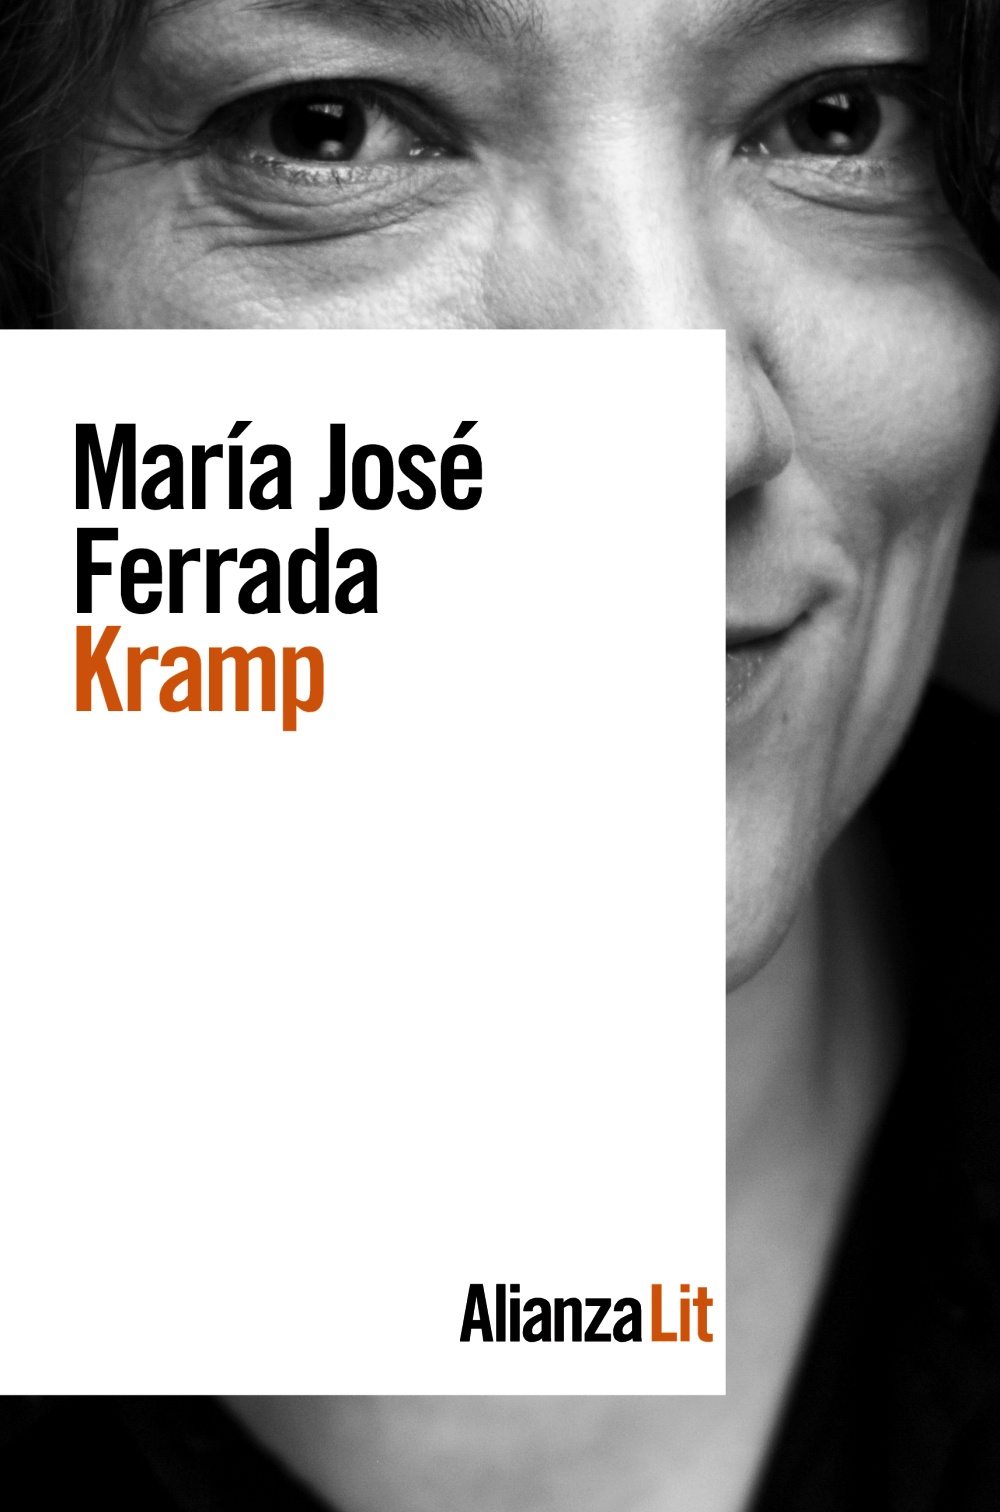 "Kramp" von María José Ferrada